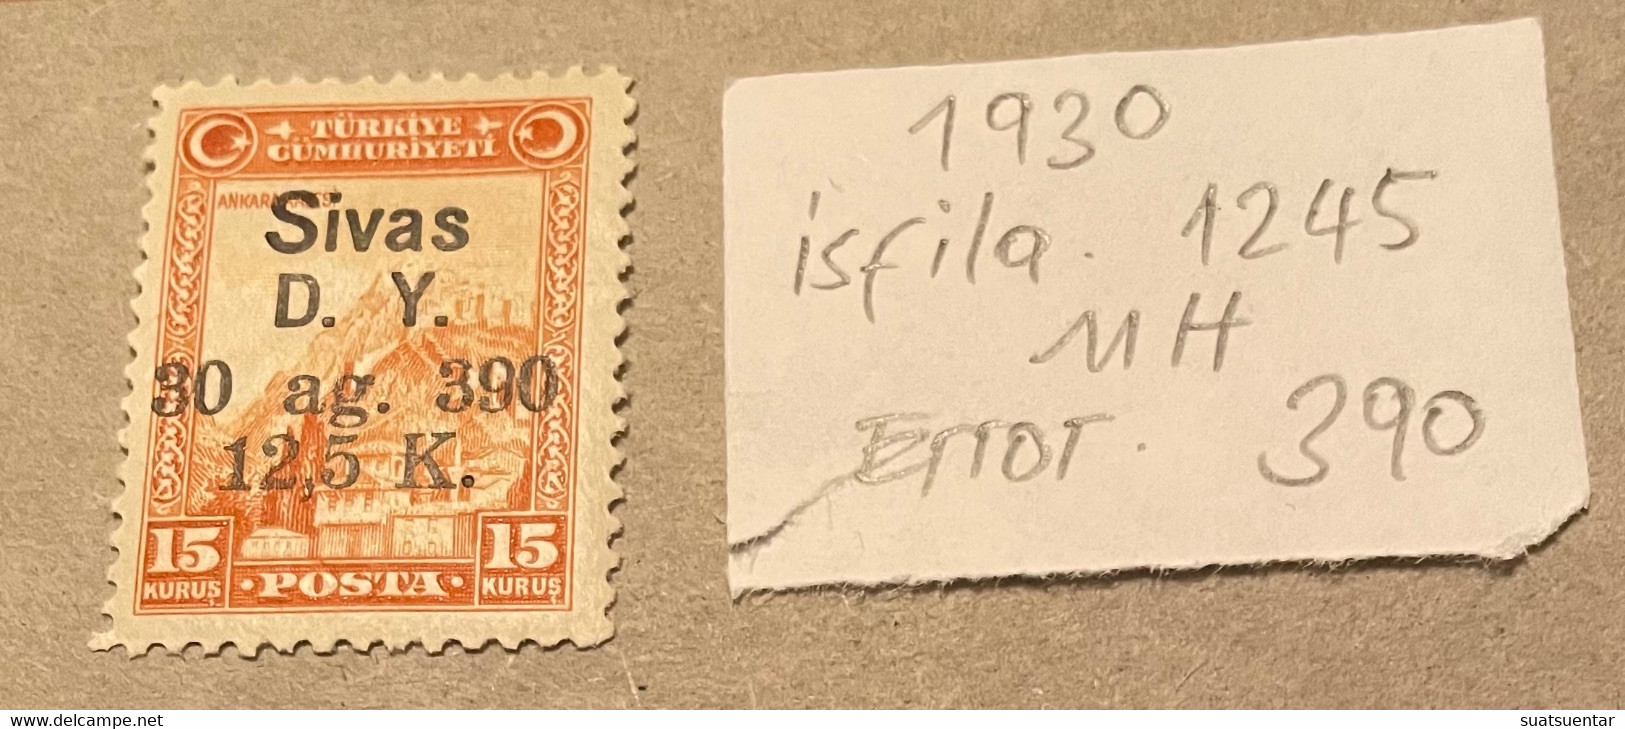 1930 Sivas-Ankara Railway Stamps Error   390 MH Isfila 1245 - Nuovi